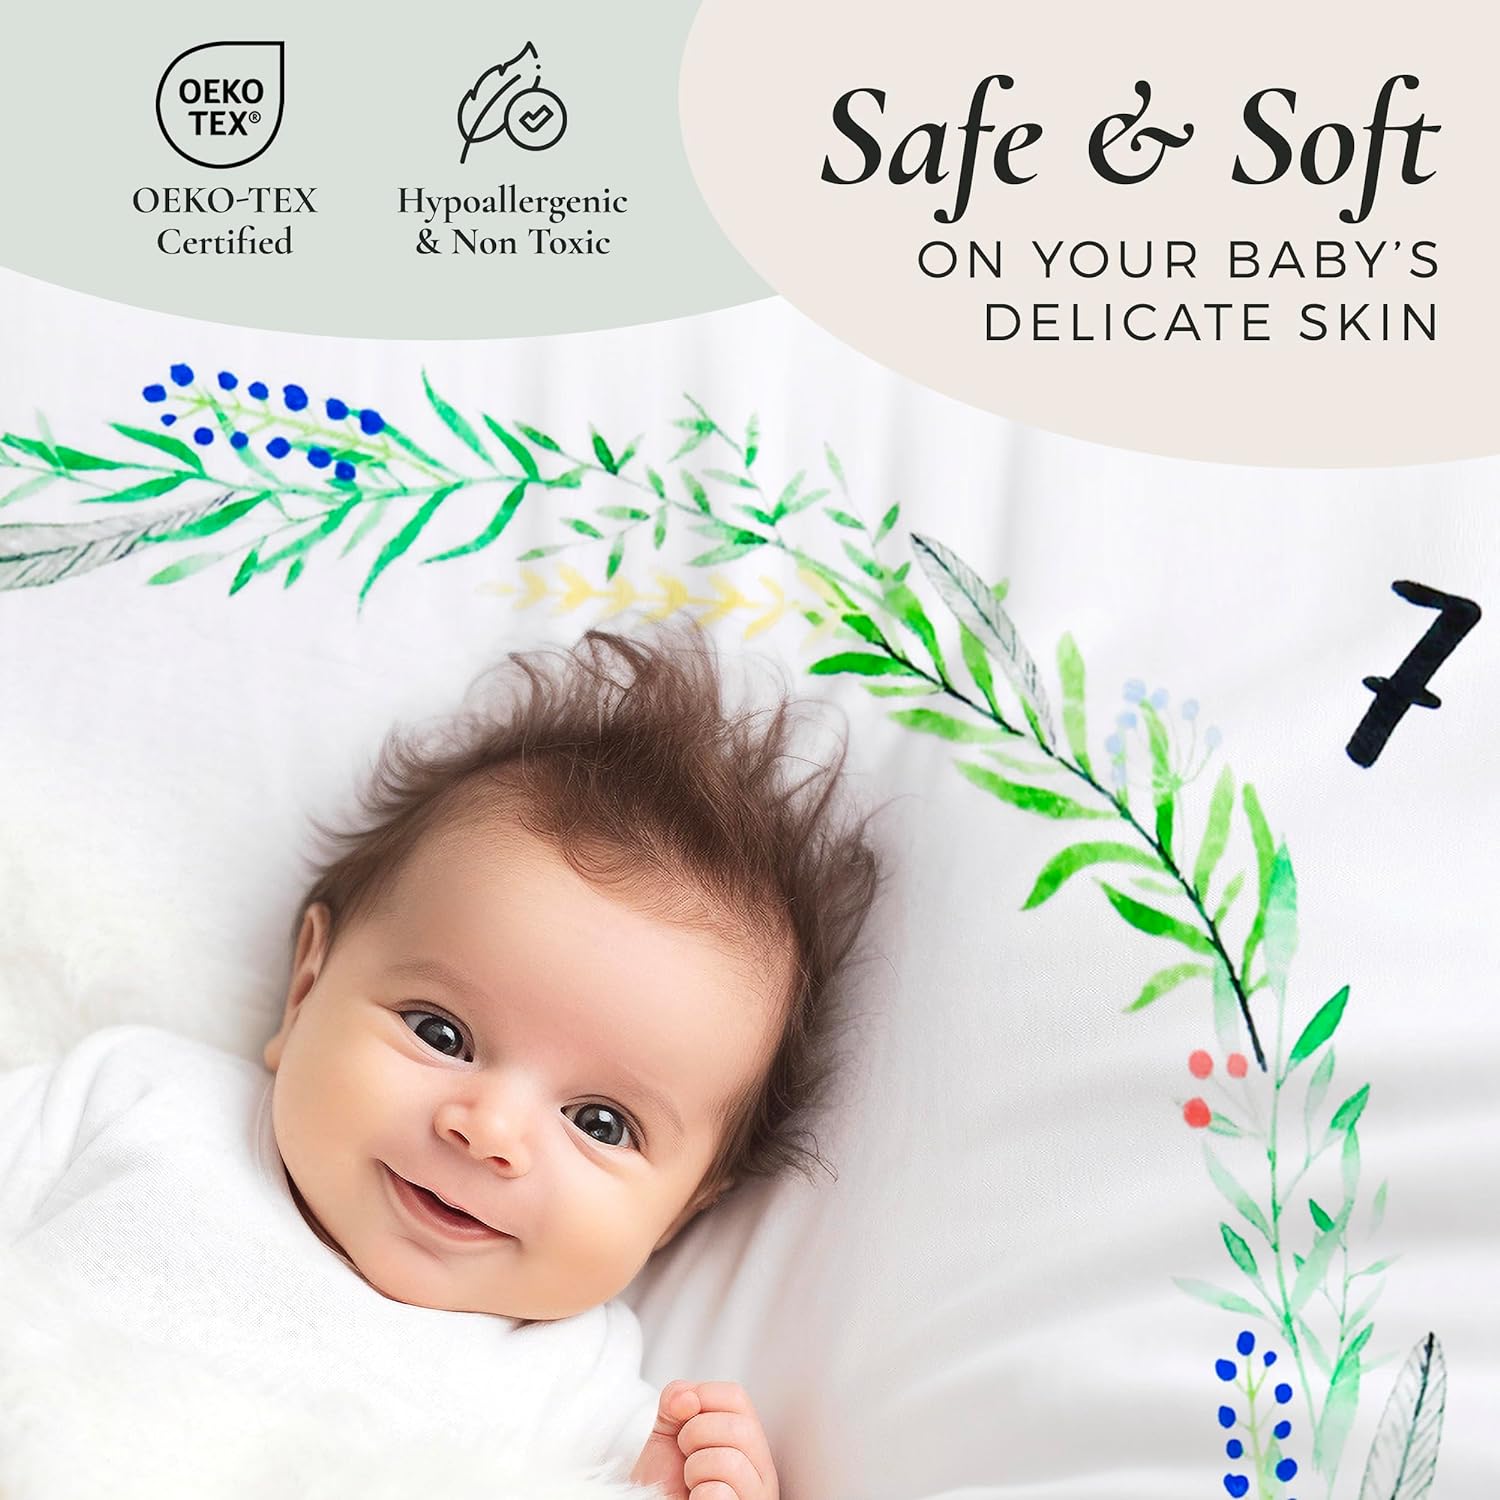 Bloom & Bear Monthly Baby Milestone Blanket and Milestone Card Set